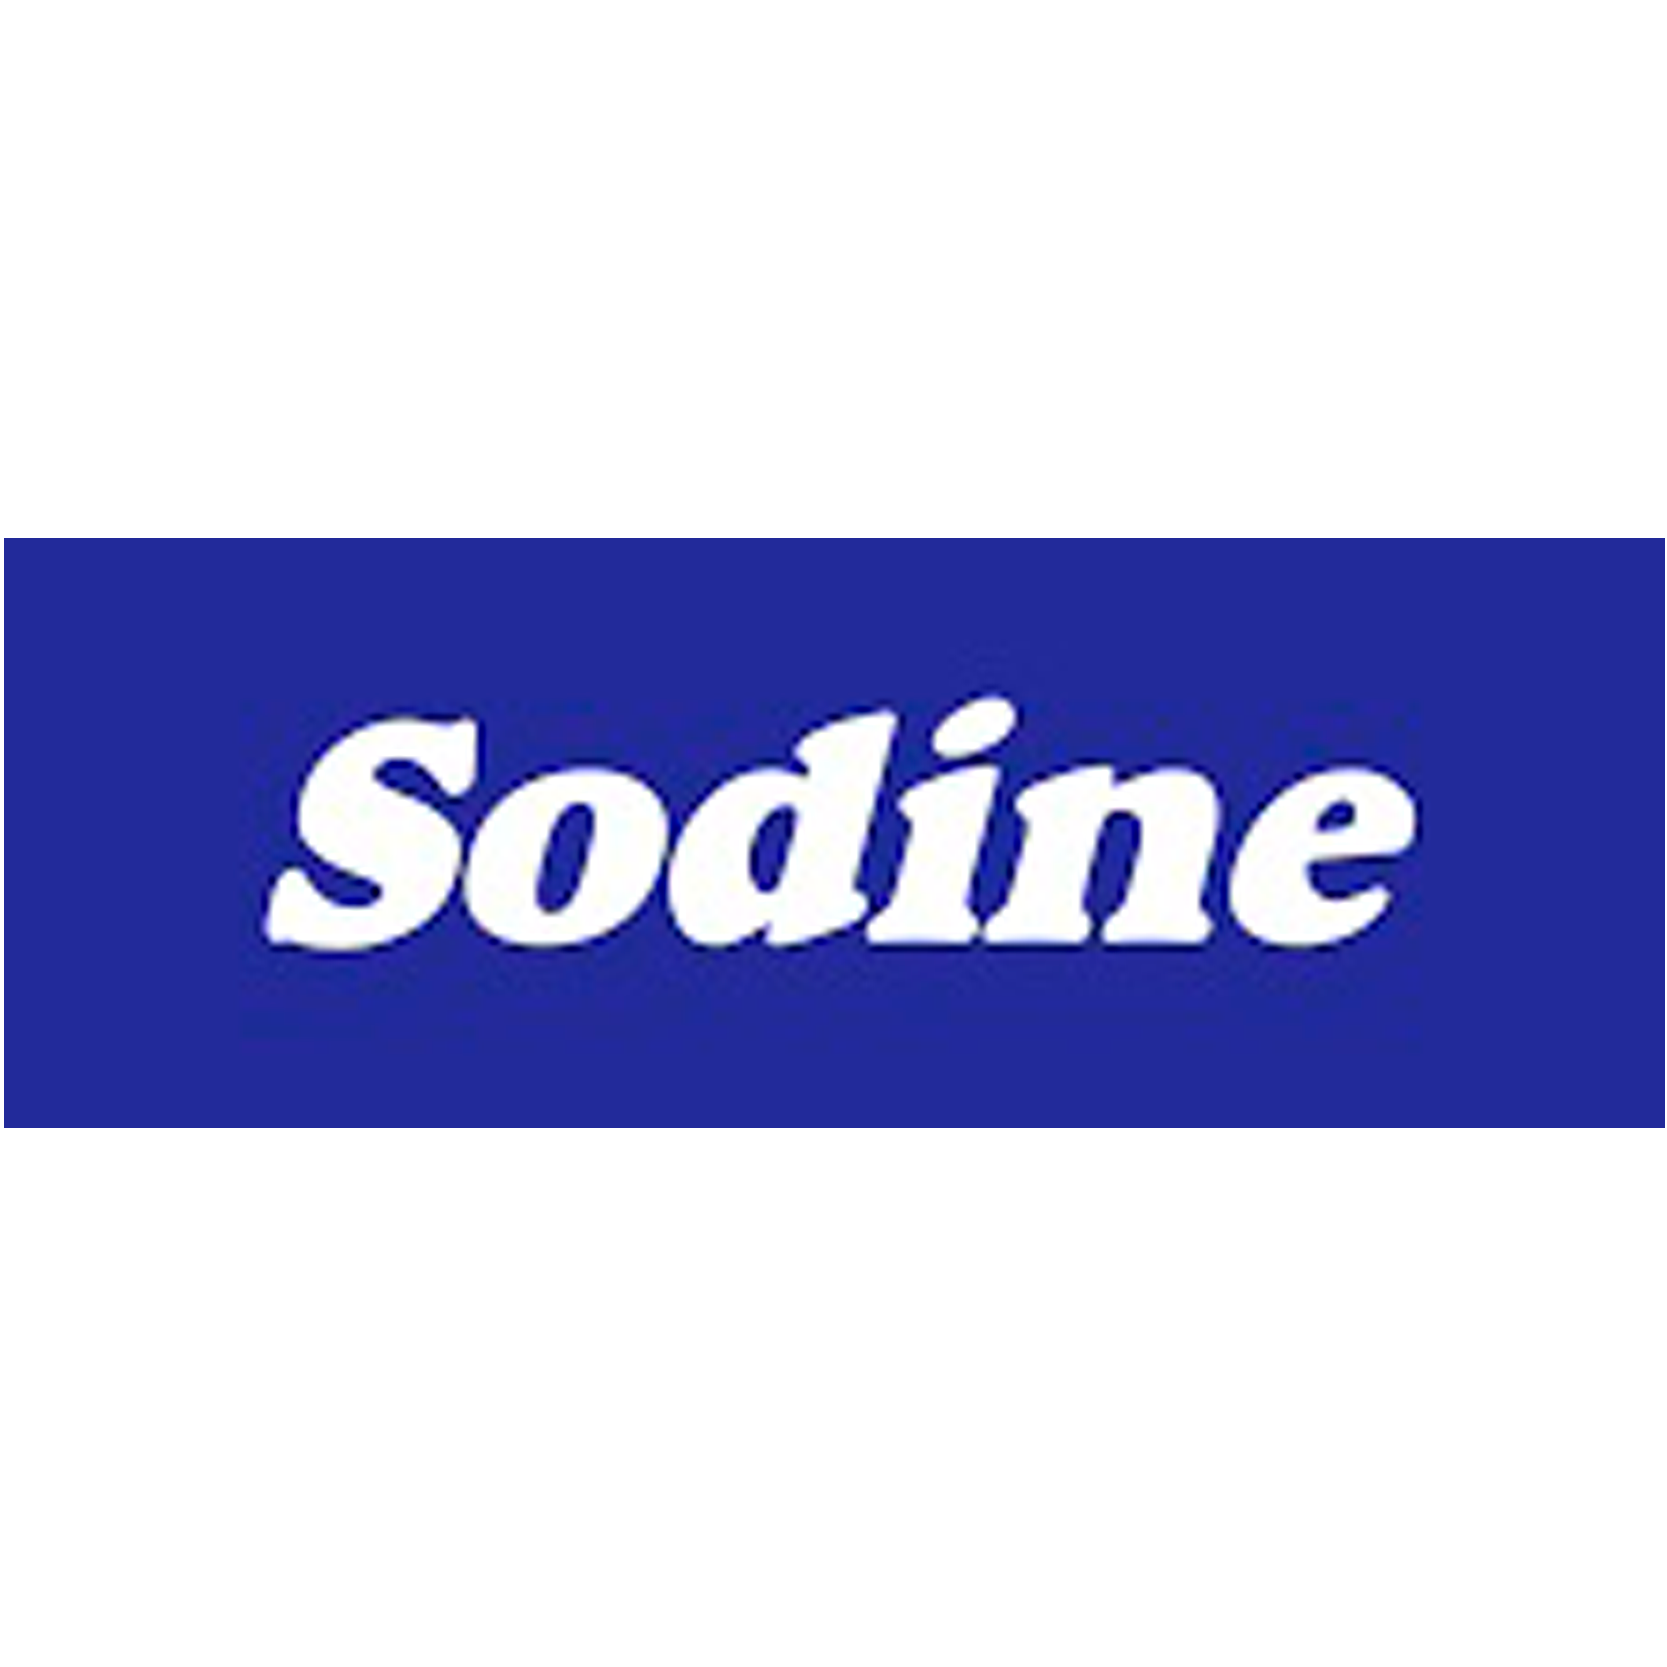 sodine